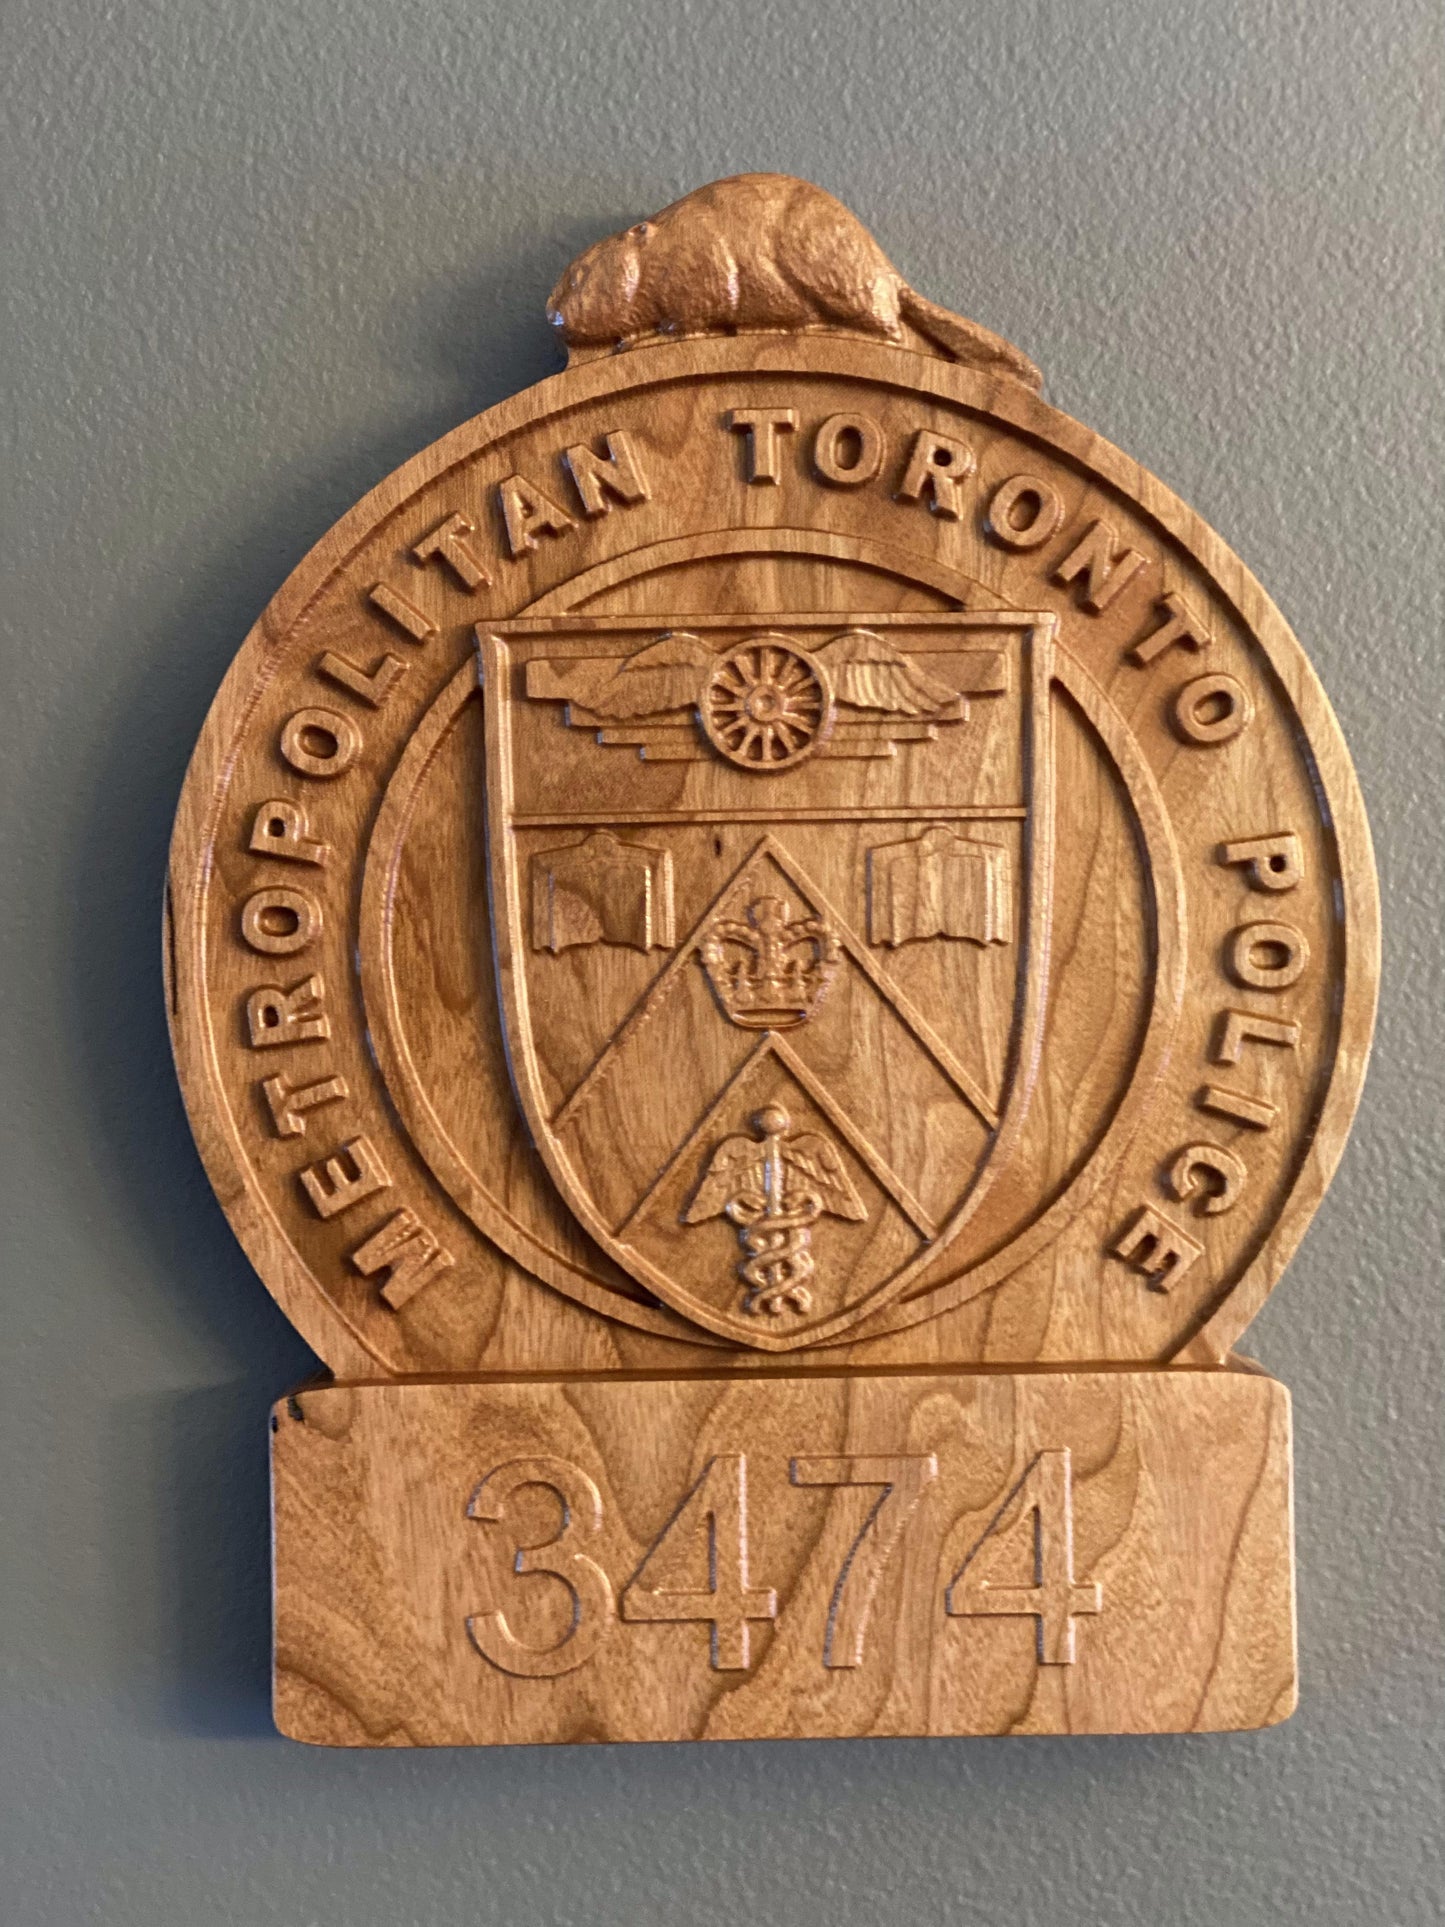 Toronto Police Wooden Badge